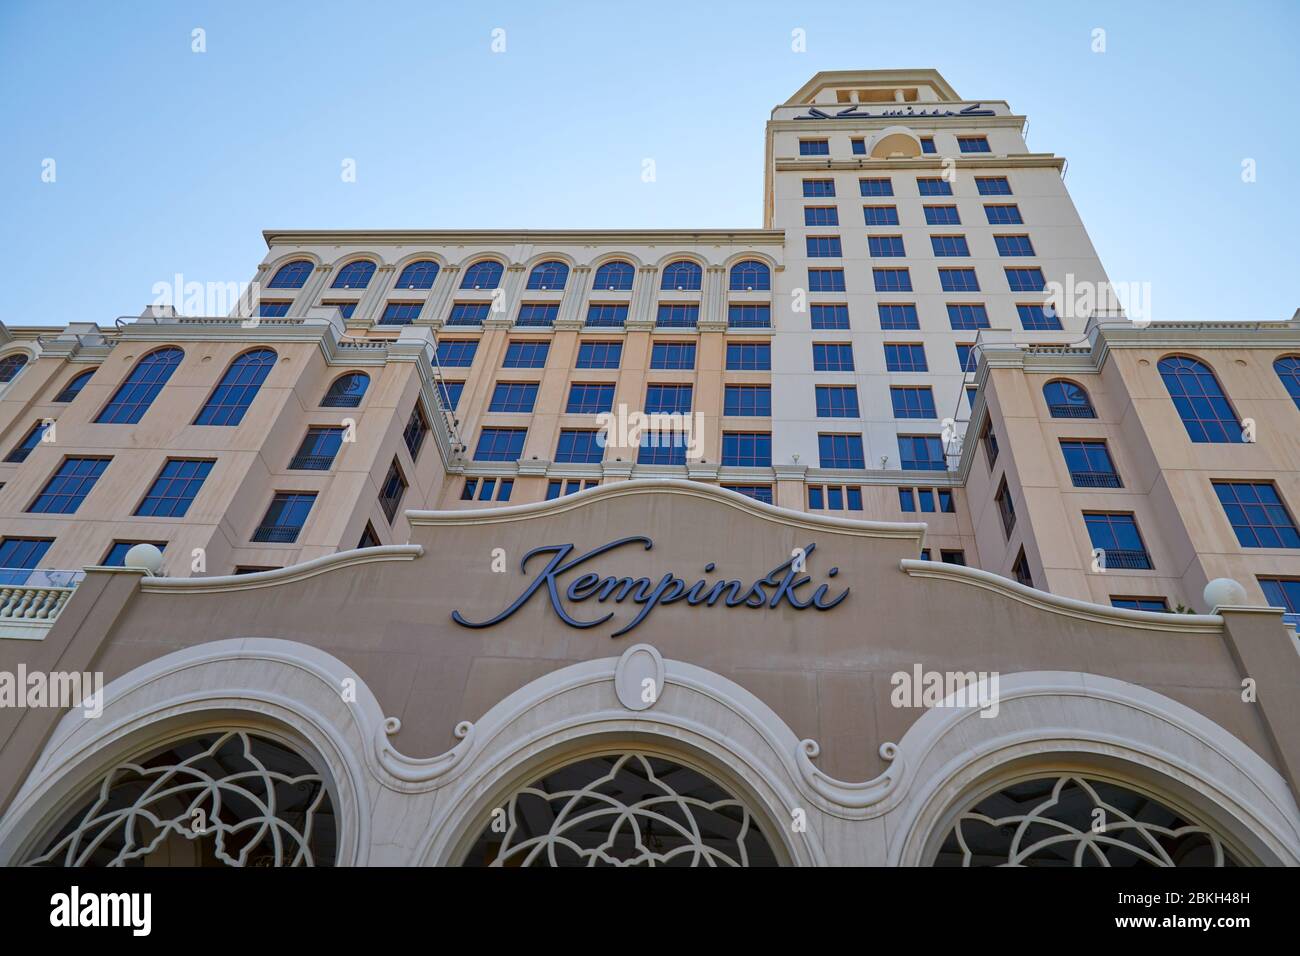 DUBAI, UNITED ARAB EMIRATES - NOVEMBER 22, 2019: Kempinski, luxury hotel facade low angle view in a sunny day Stock Photo